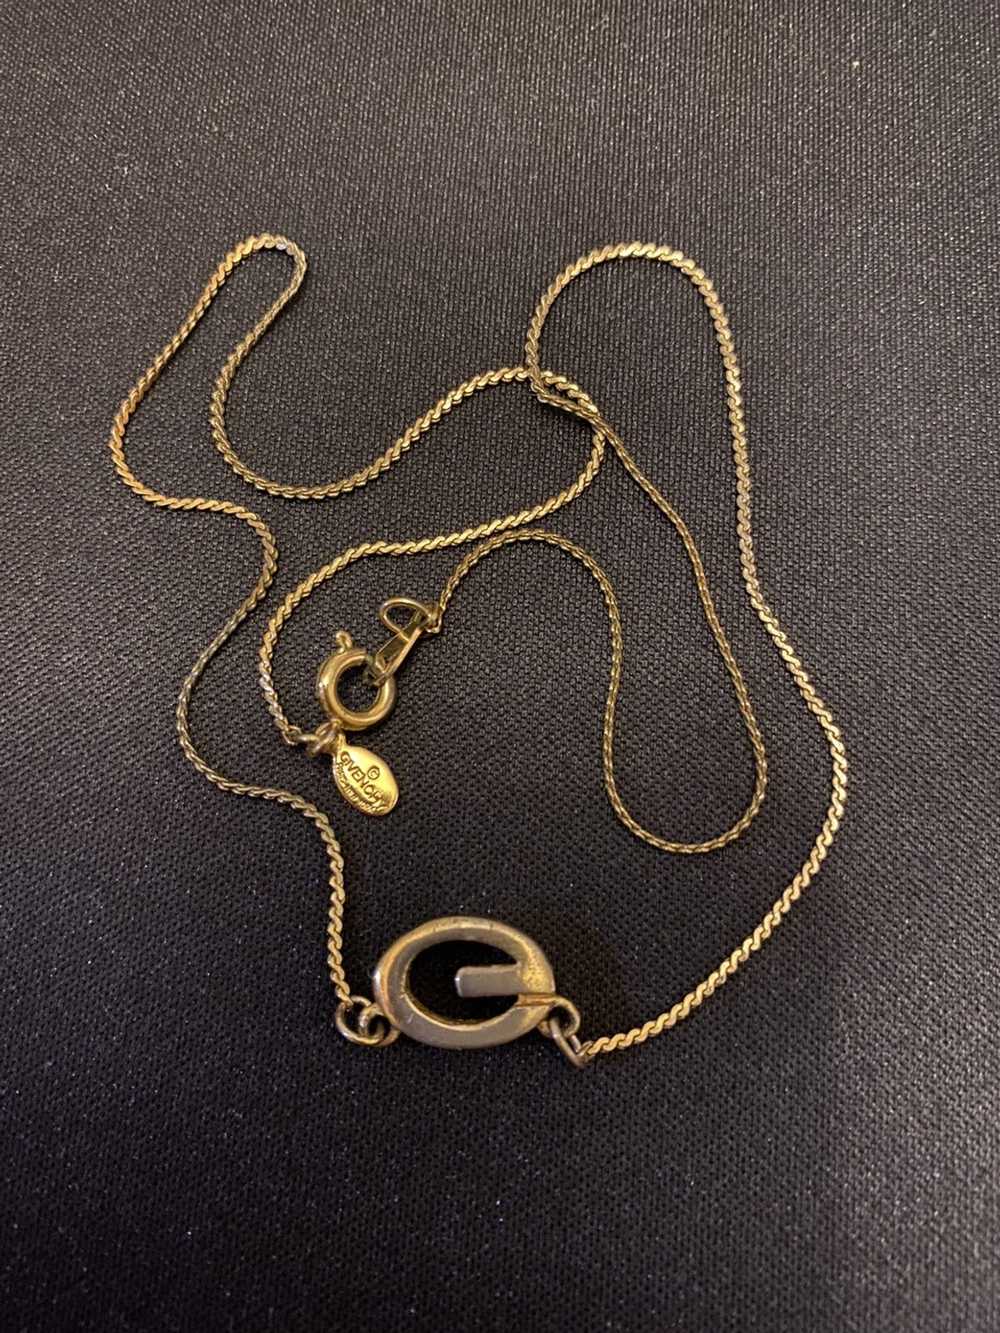 Givenchy Givenchy ‘G” Logo Necklace - image 3